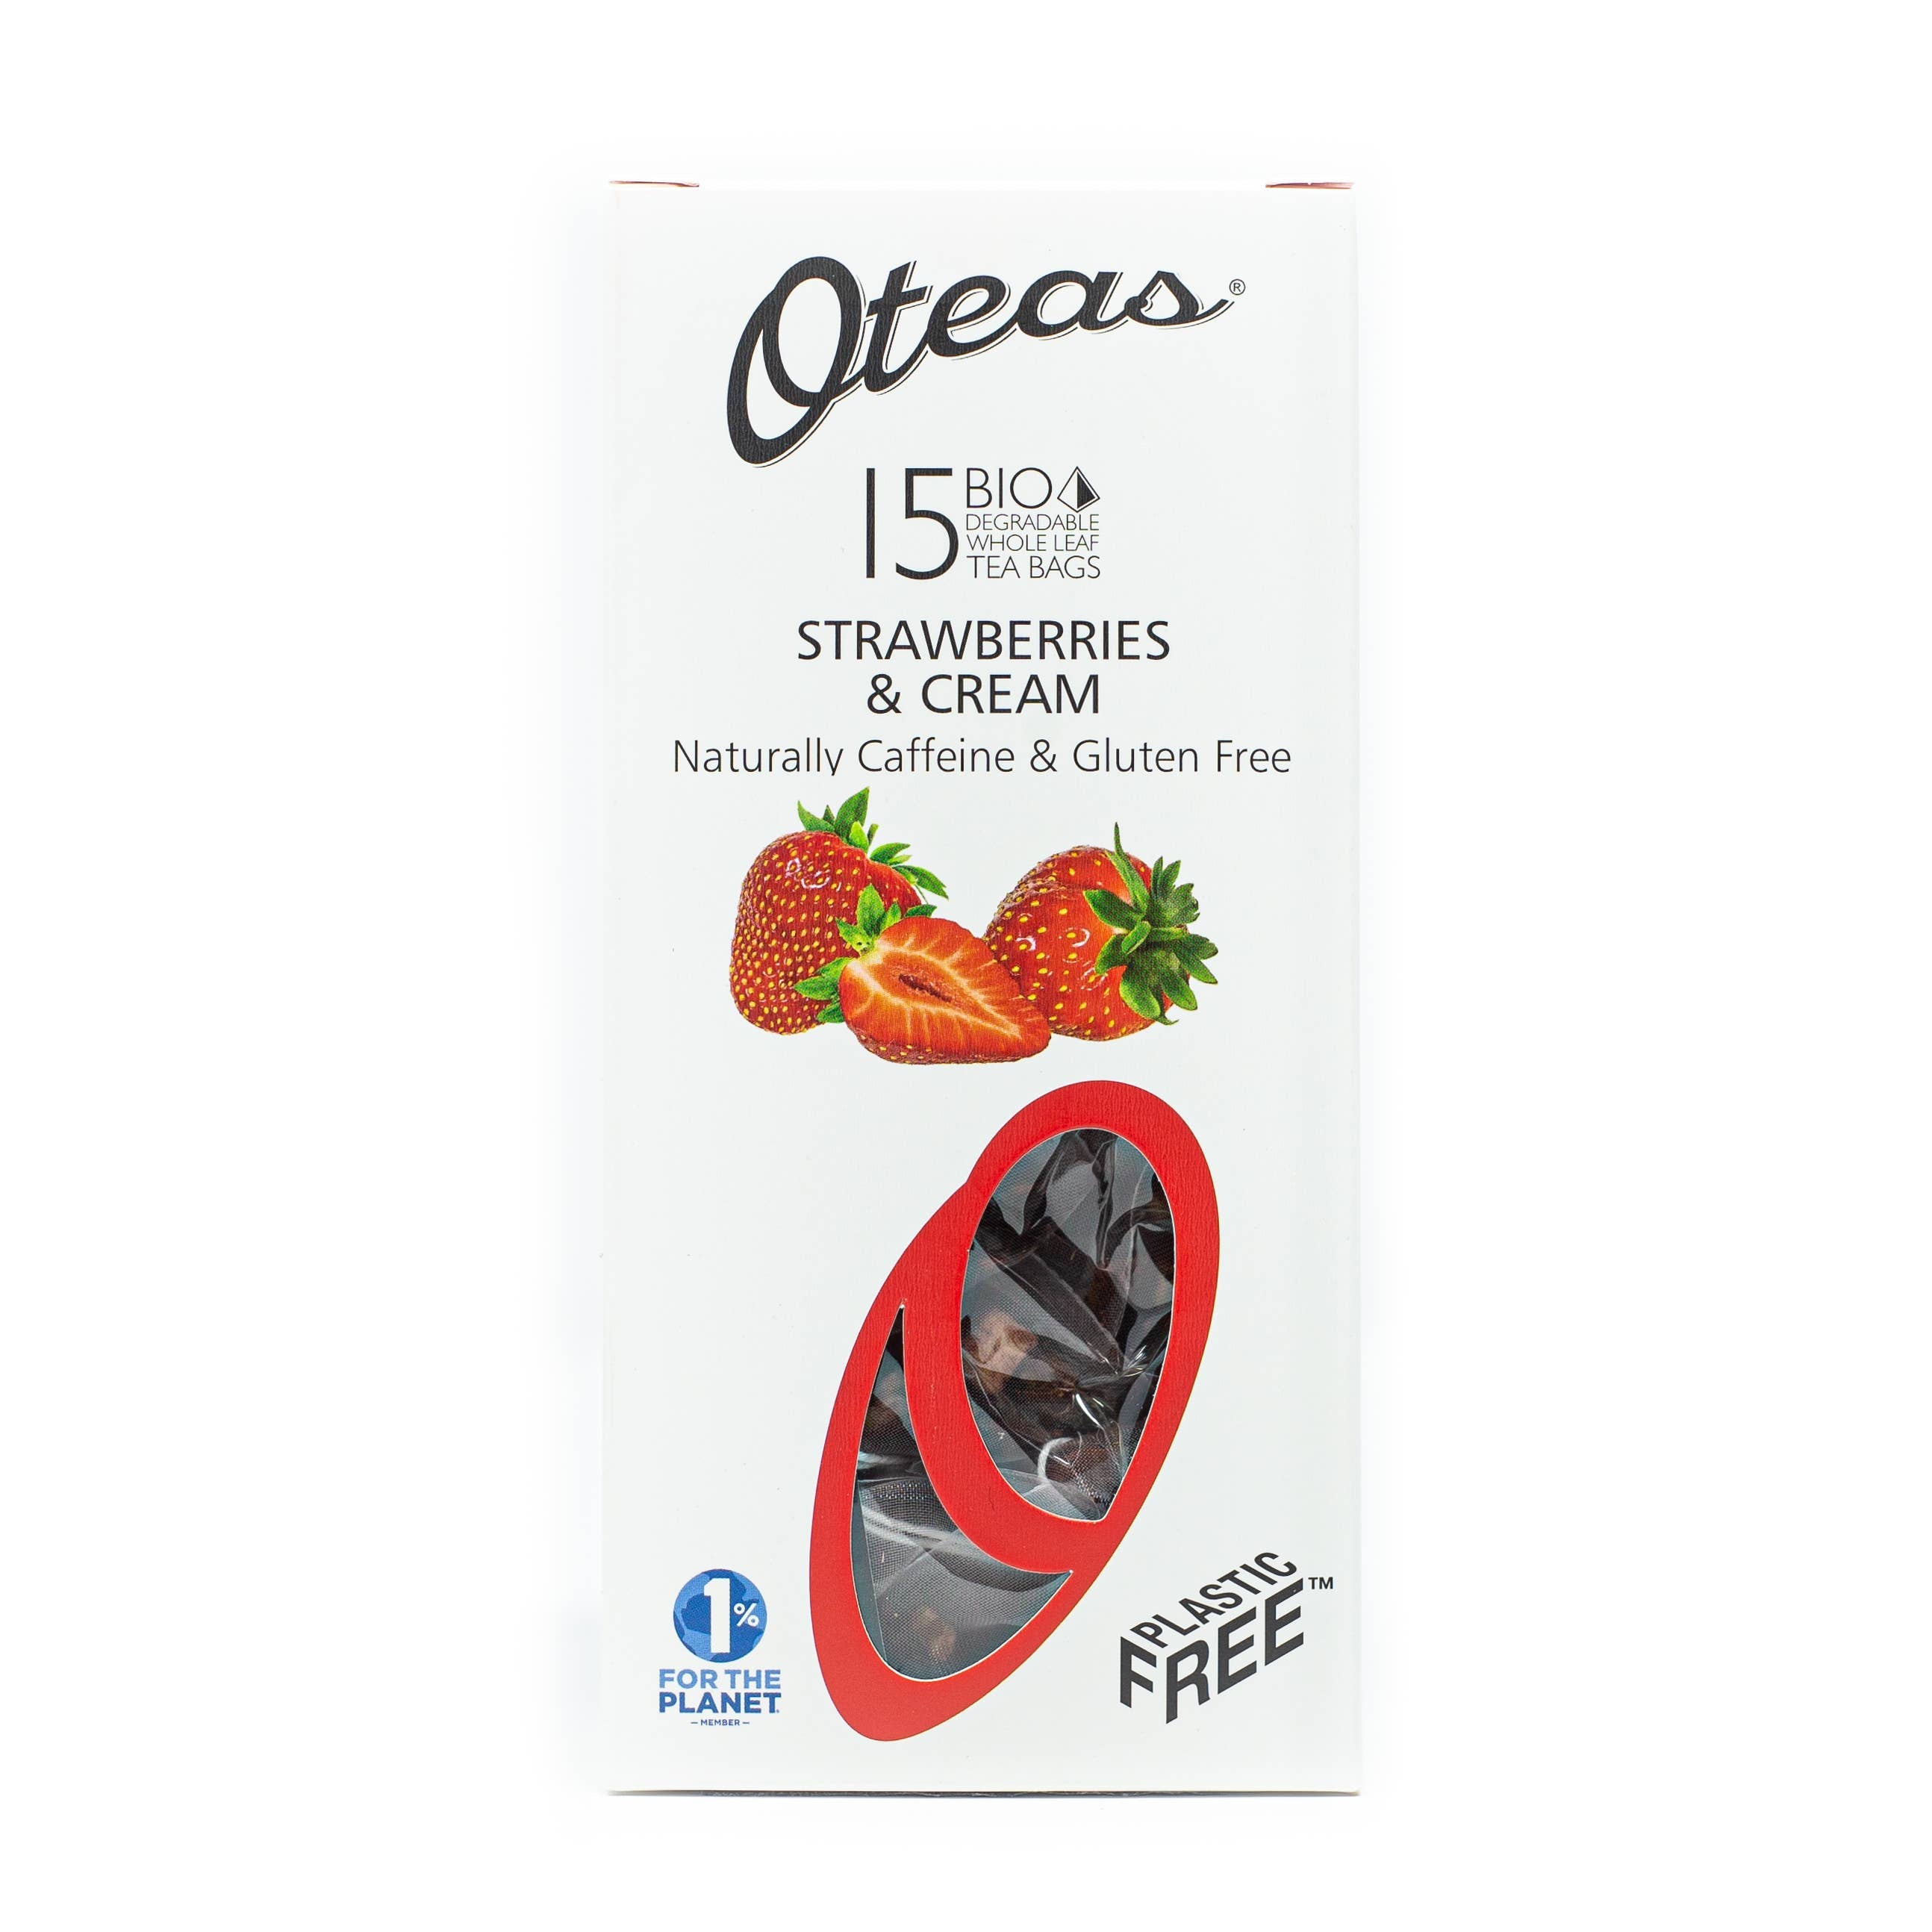 Oteas - Strawberries & Cream